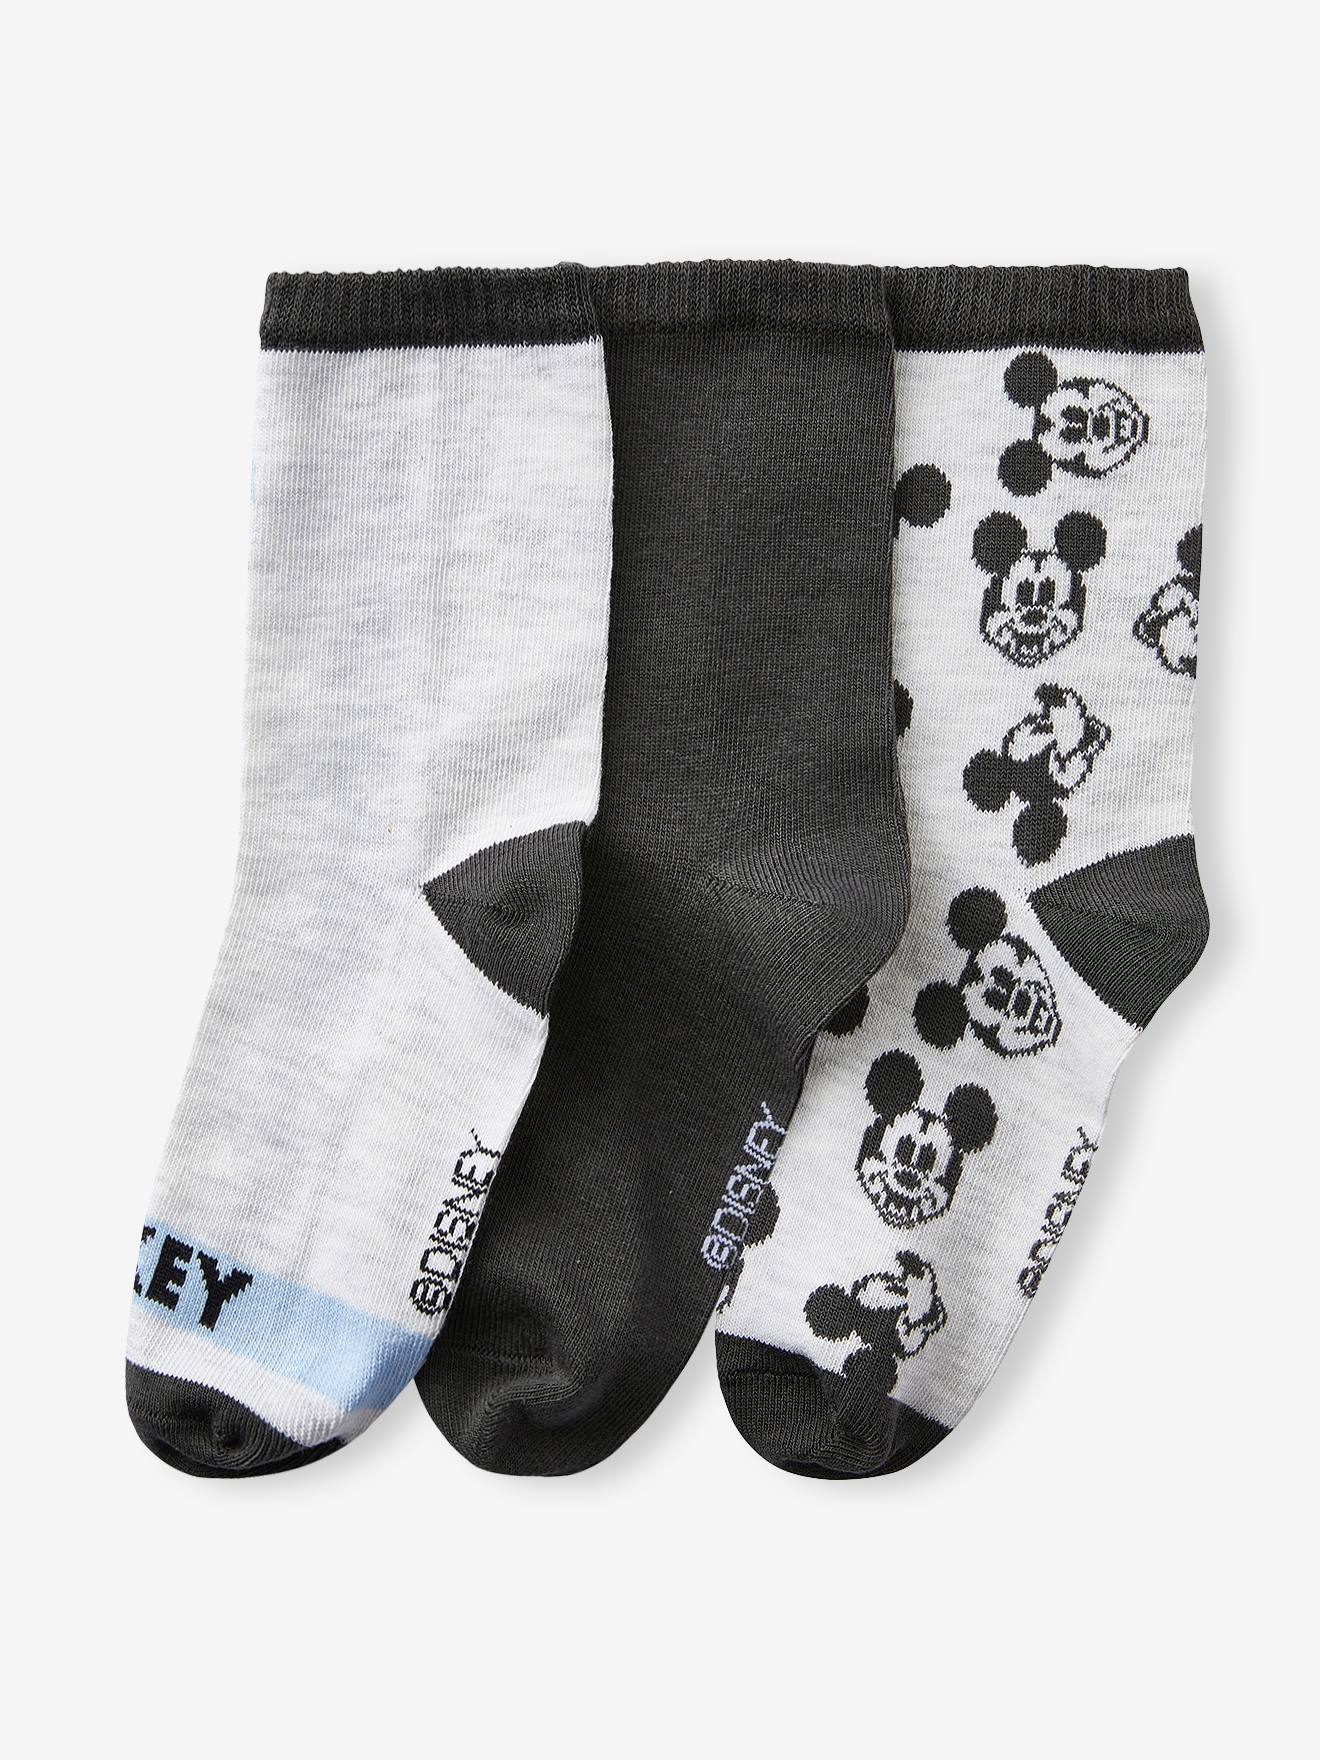 https://media.vertbaudet.com/Pictures/vertbaudet/246221/pack-of-3-pairs-of-mickey-mouse-socks-by-disney.jpg